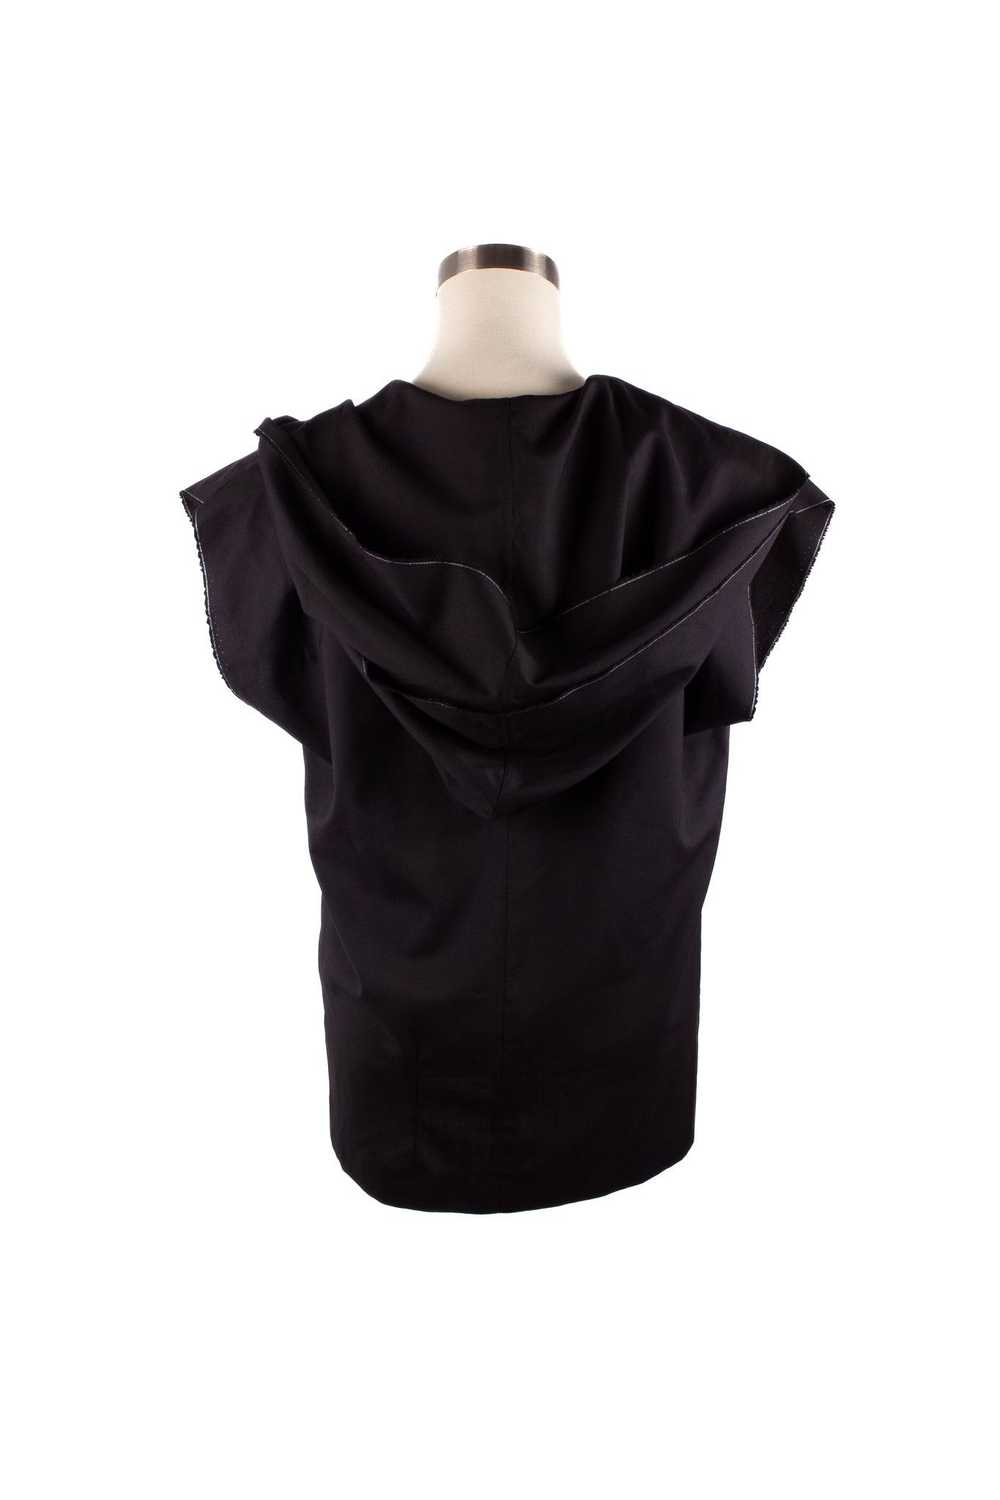 Dior DIOR HOMME BLACK WOOL DOUBLE HOODED CAP SLEE… - image 4